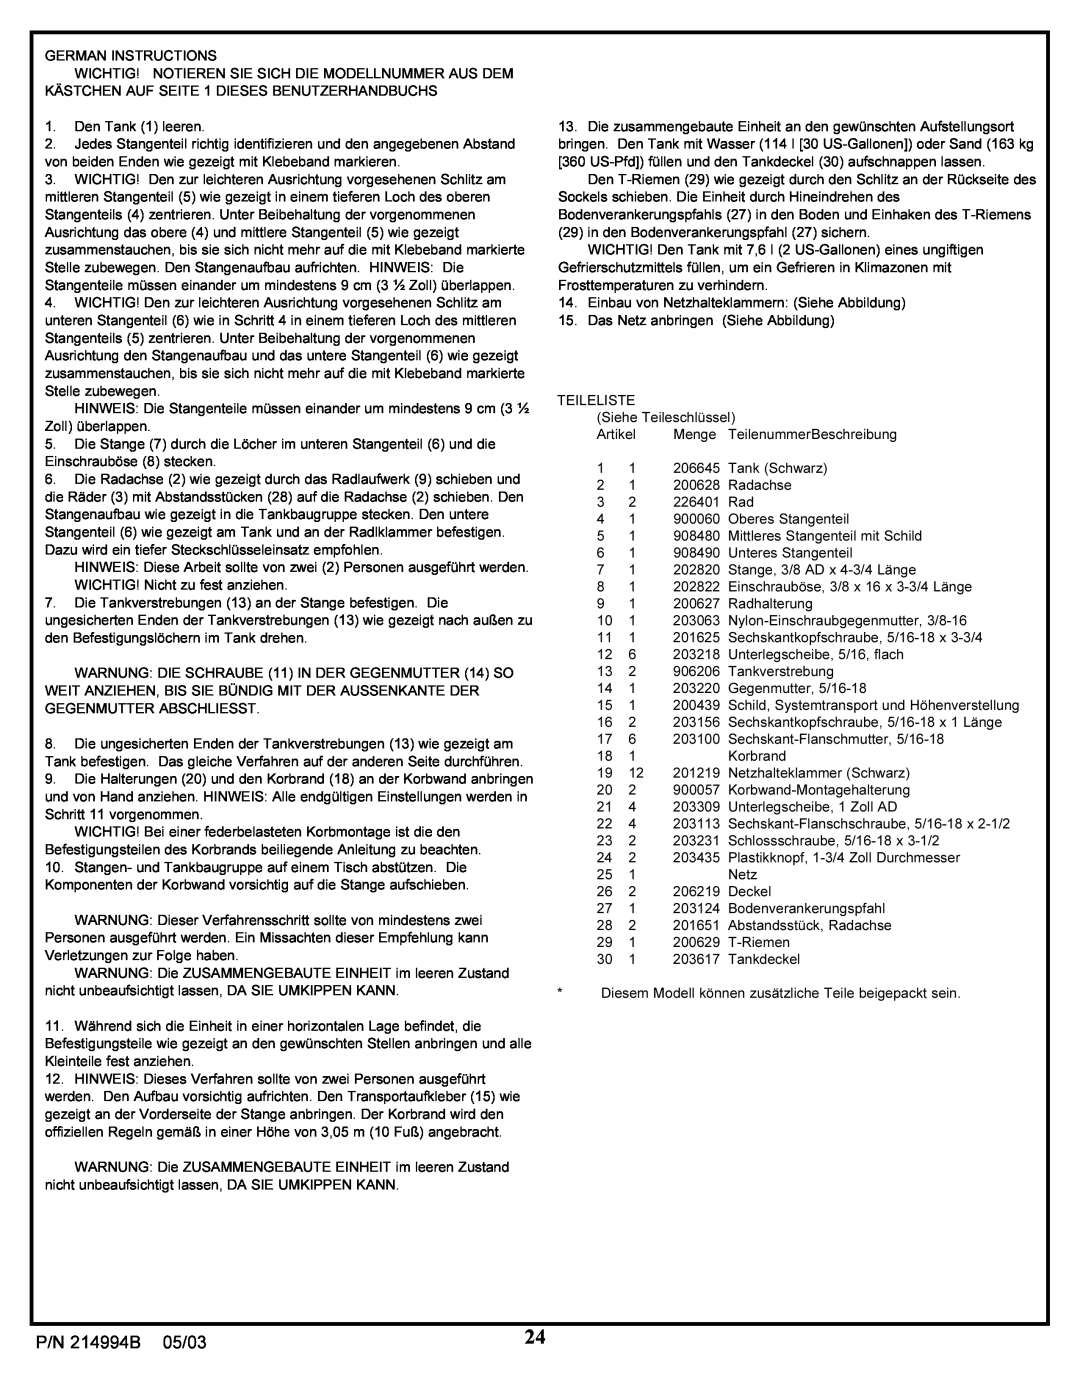 Spalding manual P/N 214994B 05/03, Netzhalteklammer Schwarz, Abstandsstück, Radachse 